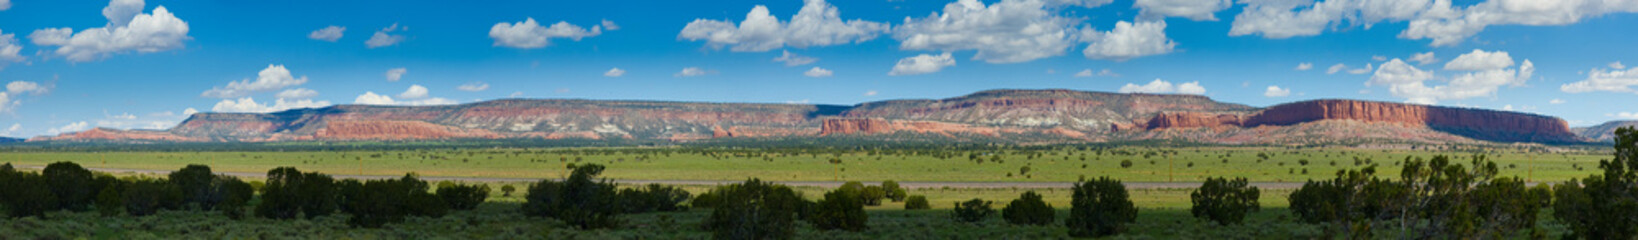 Montagnes rouges de l& 39 Arizona - panorama